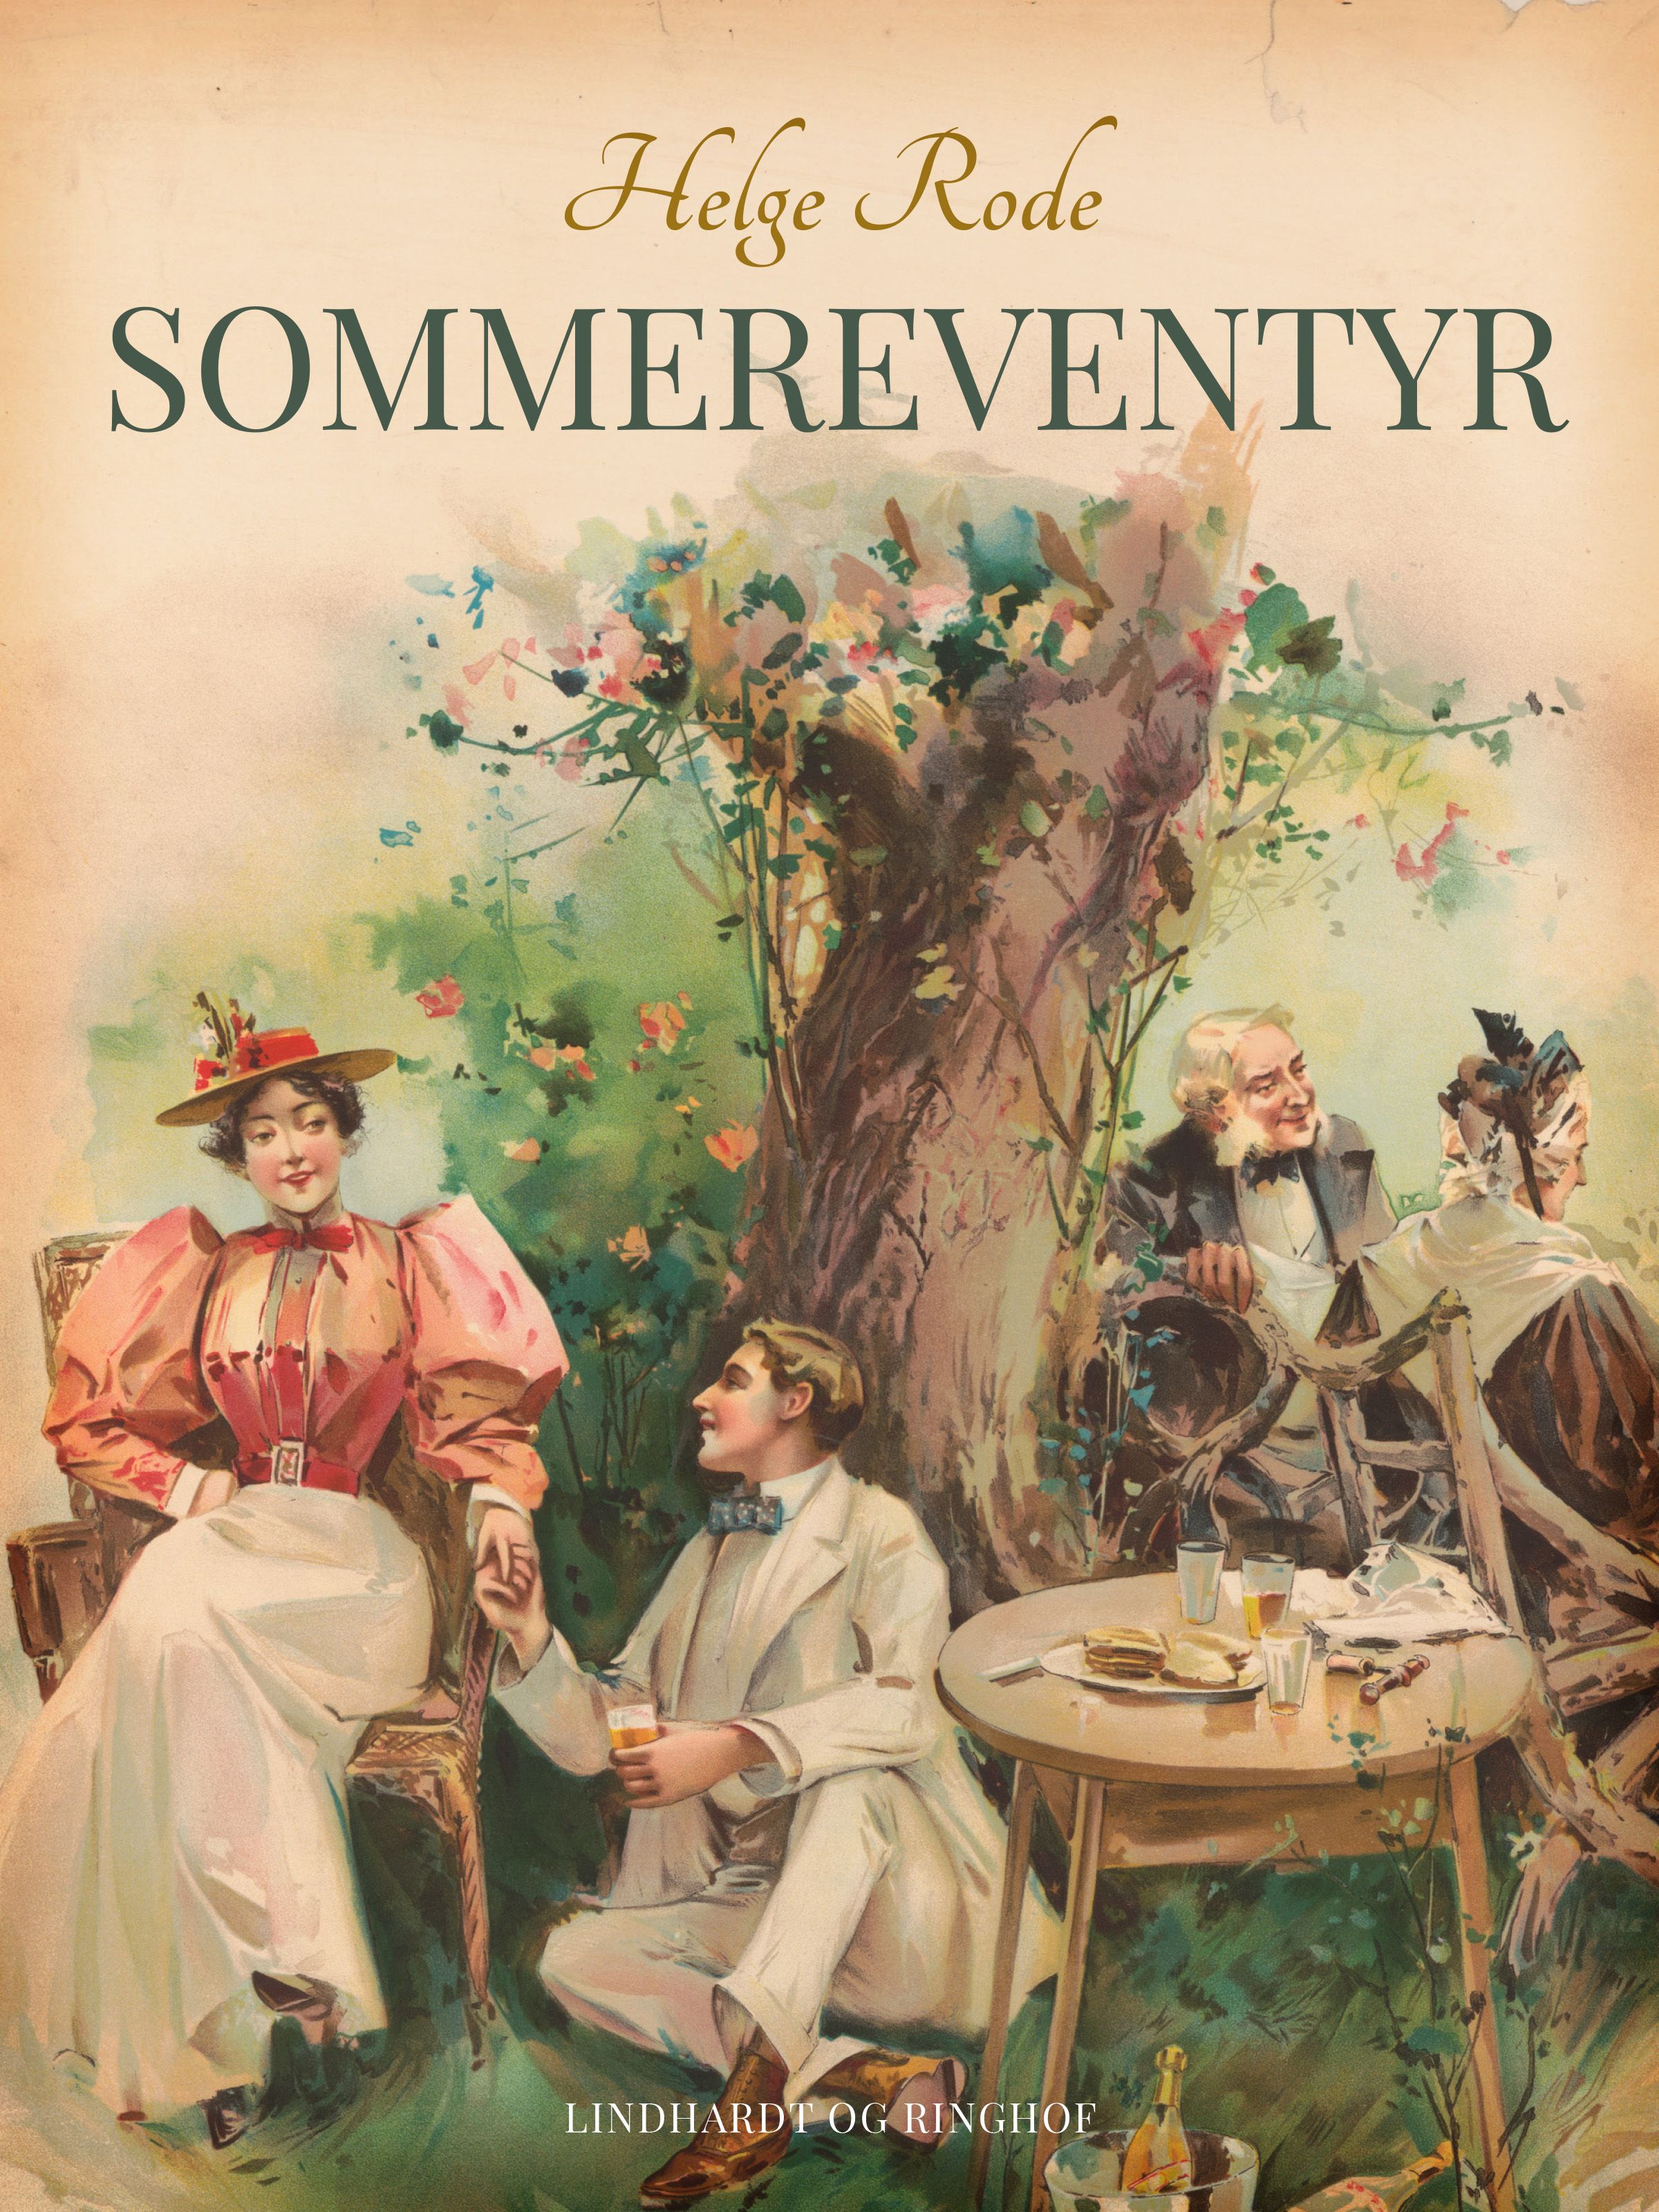 Sommereventyr, eBook by Helge Rode